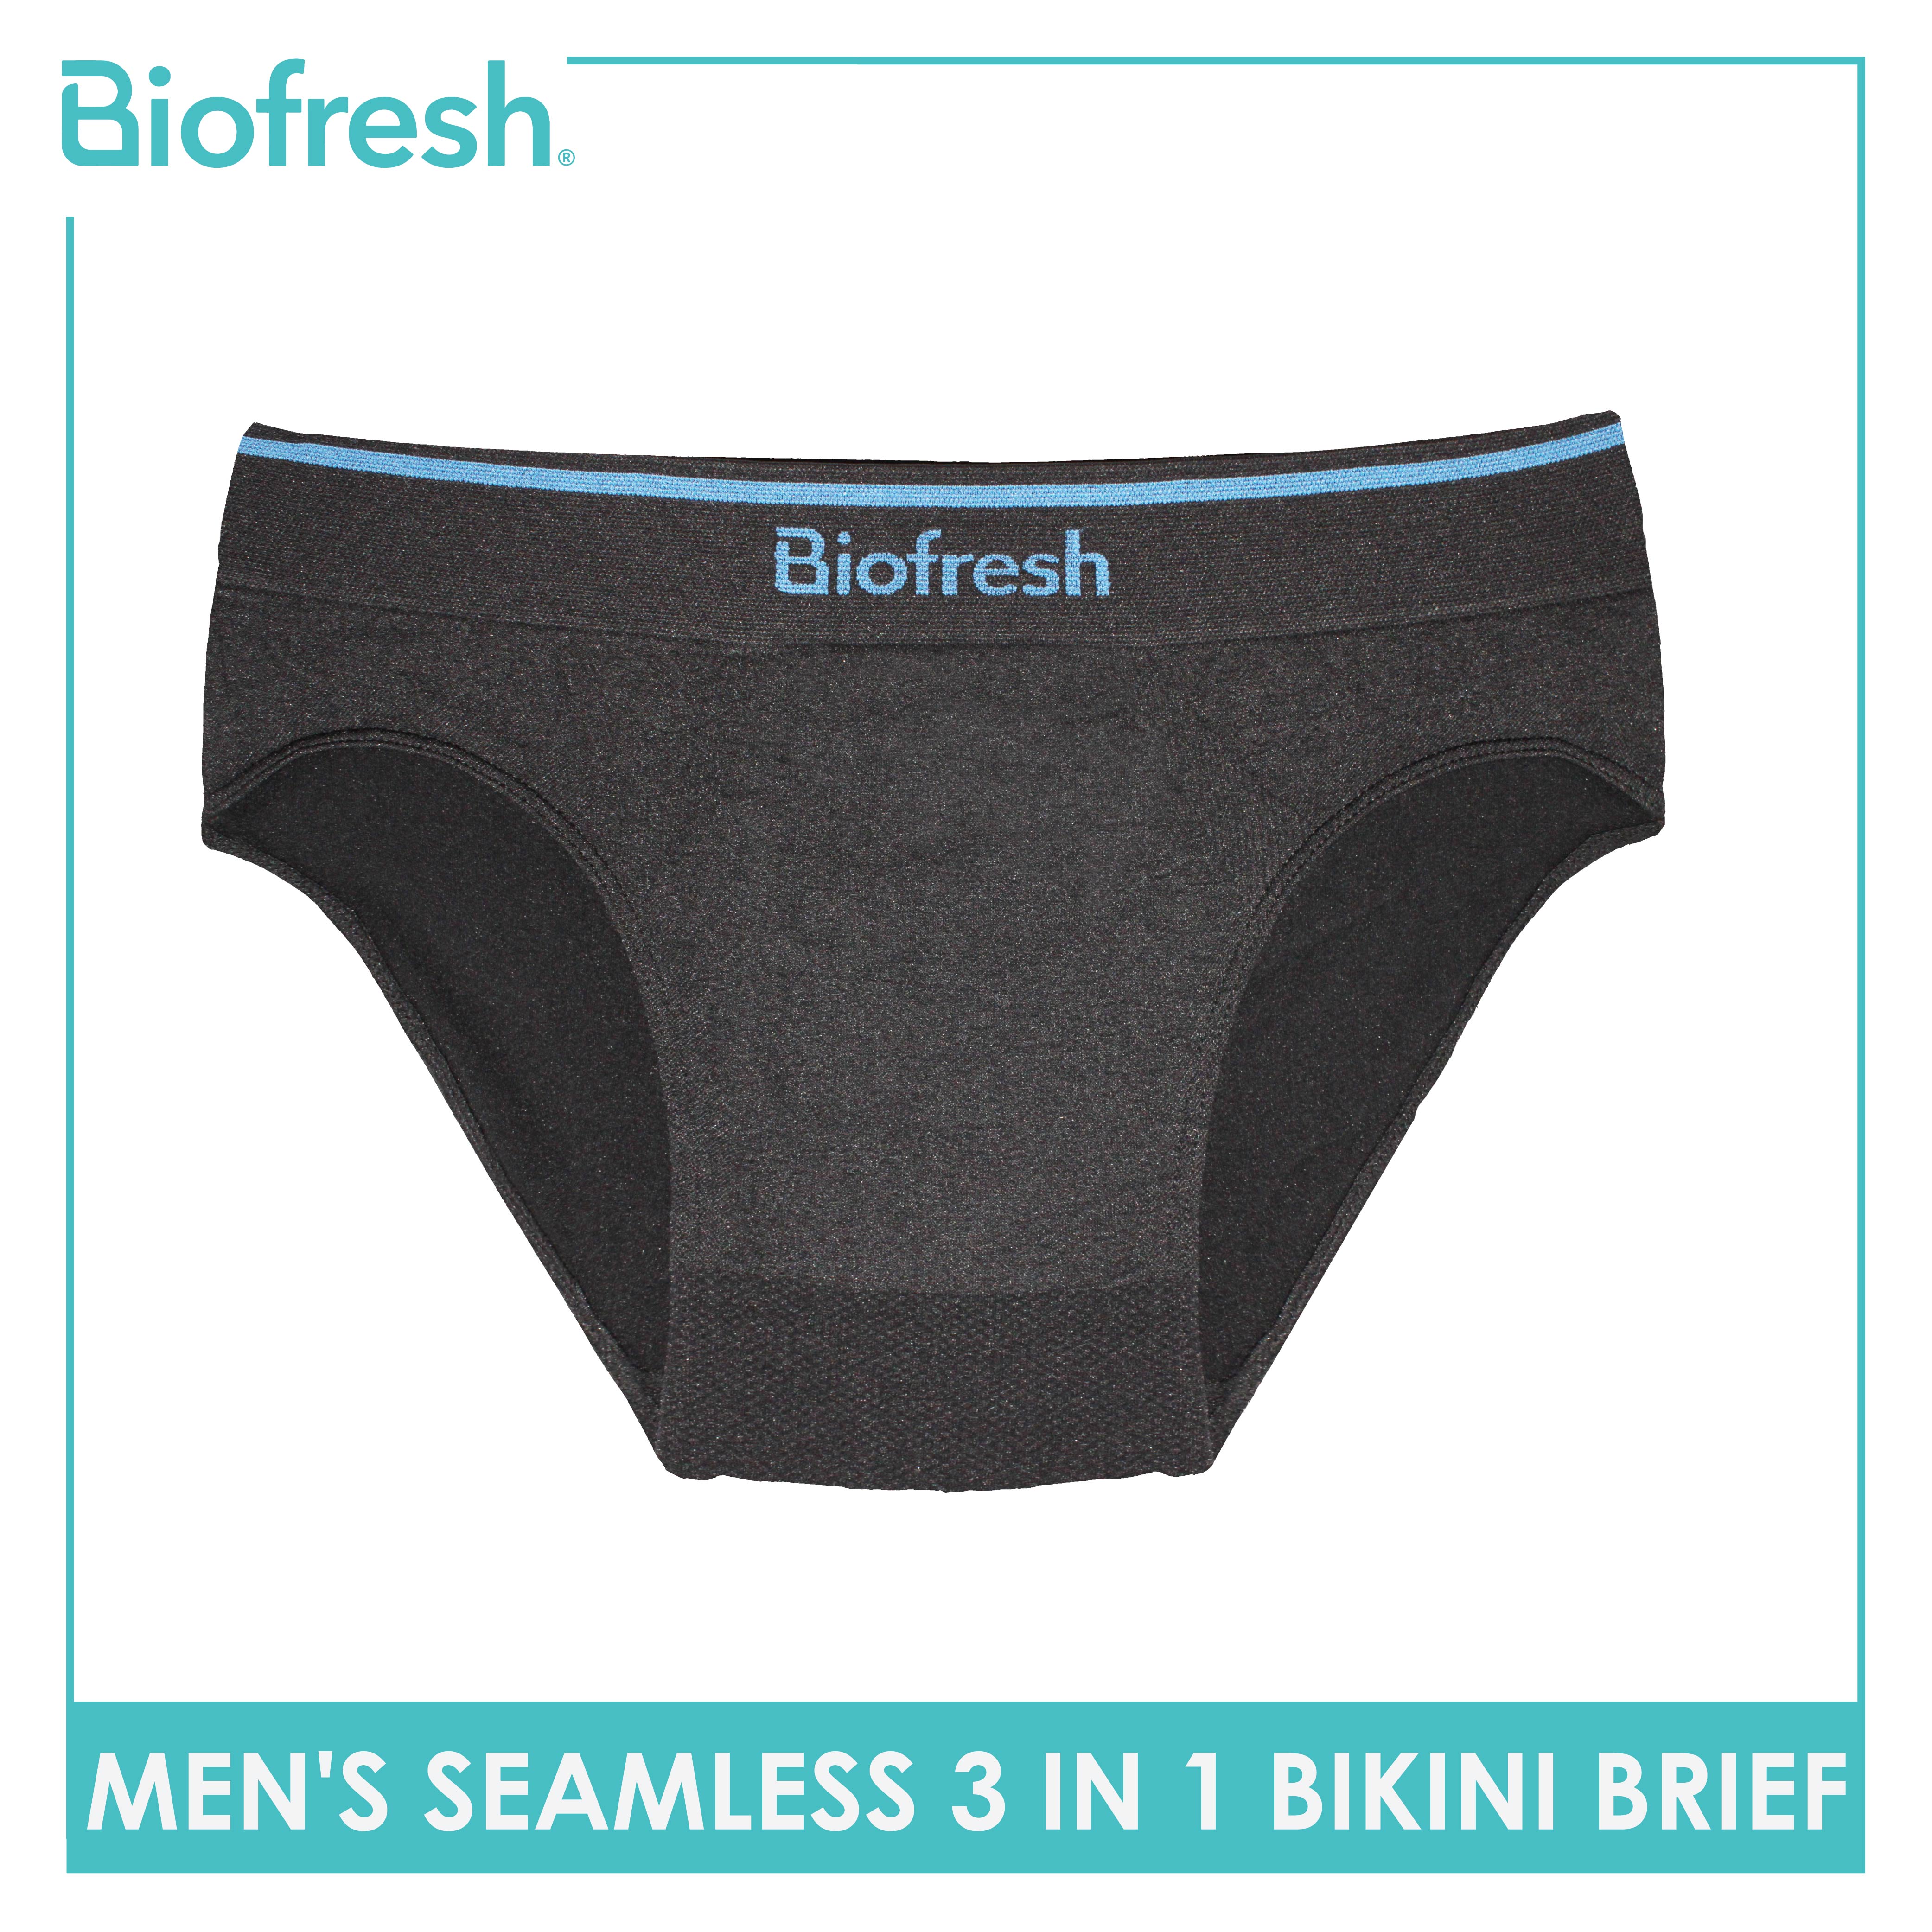 Men's Seamless Bikini Brief